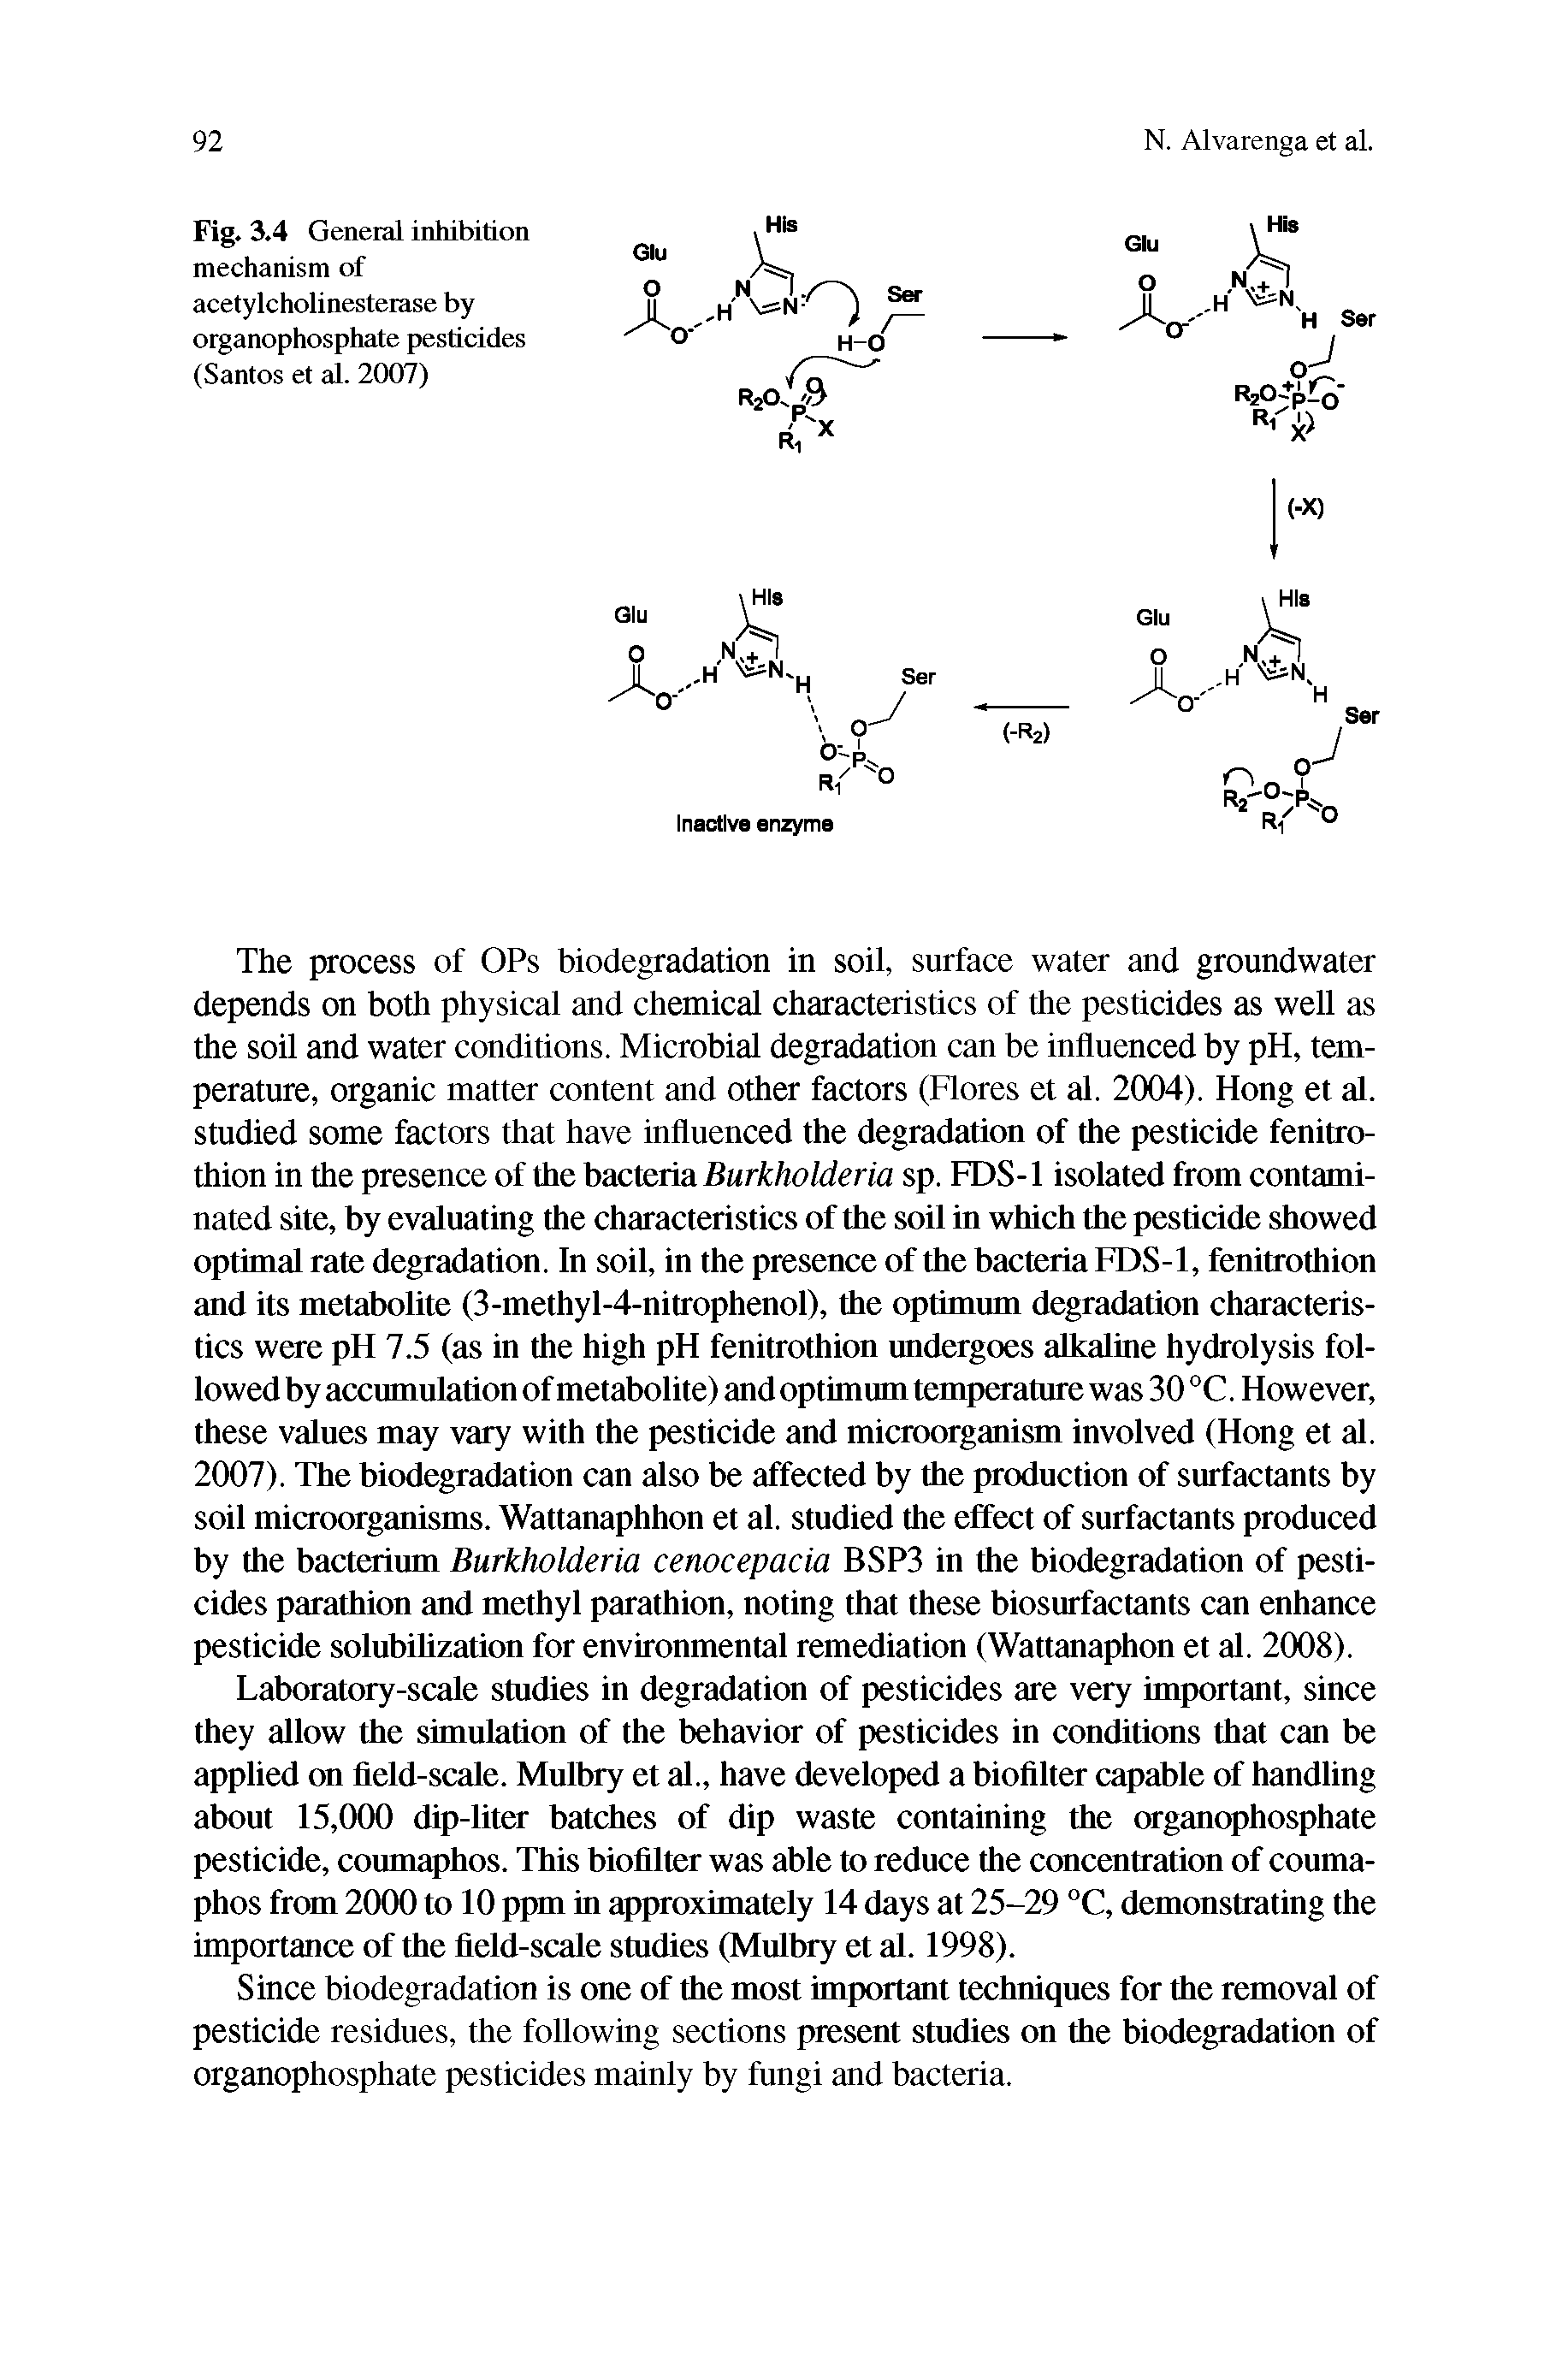 Fig. 3.4 General inhibition mechanism of acetylcholinesterase by organophosphate pesticides (Santos et td. 2007)...